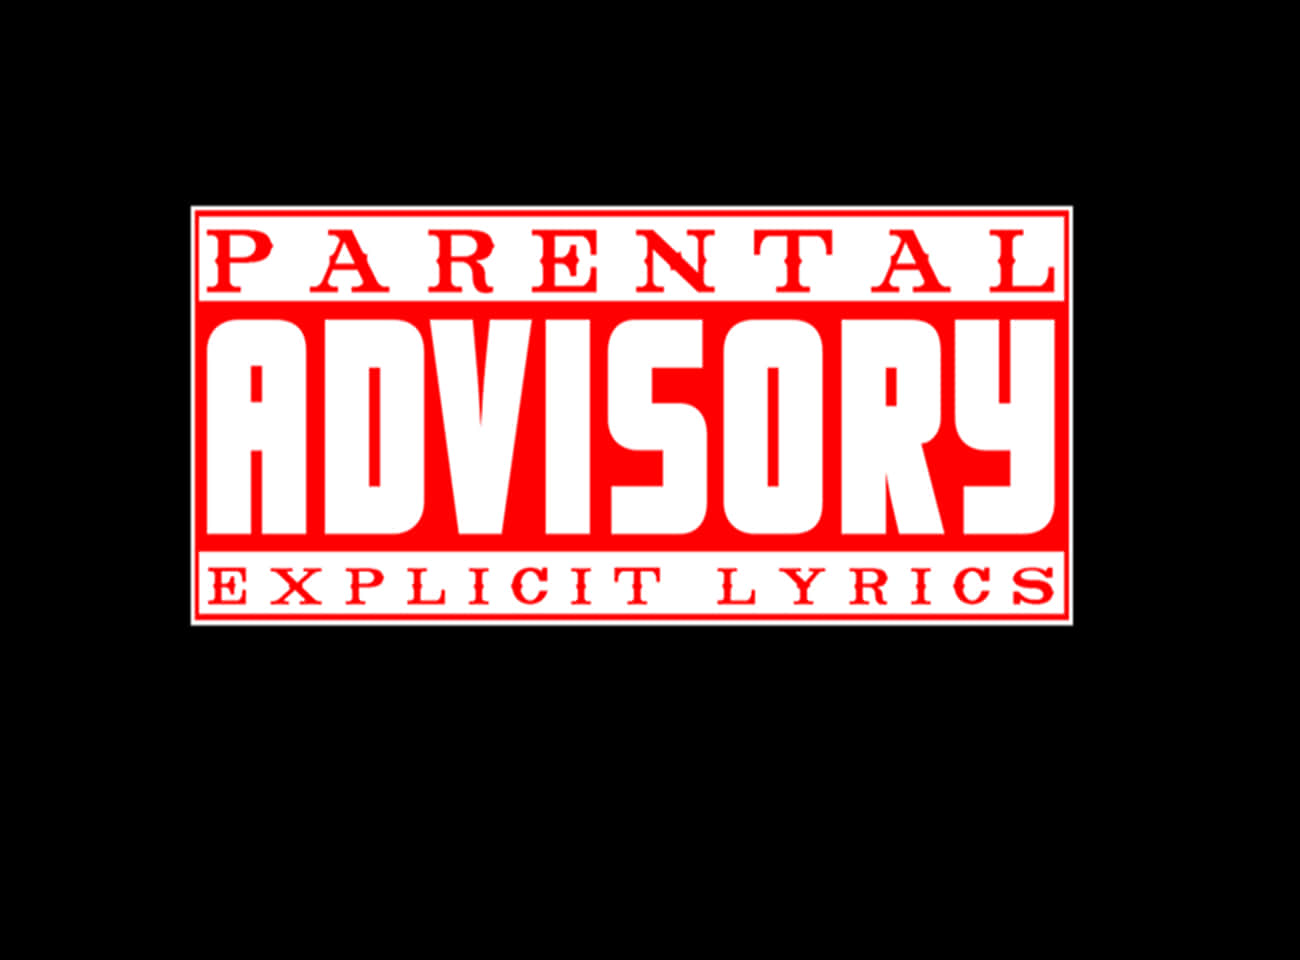 Forældre advarsel: Ekplicitte lyrics Wallpaper